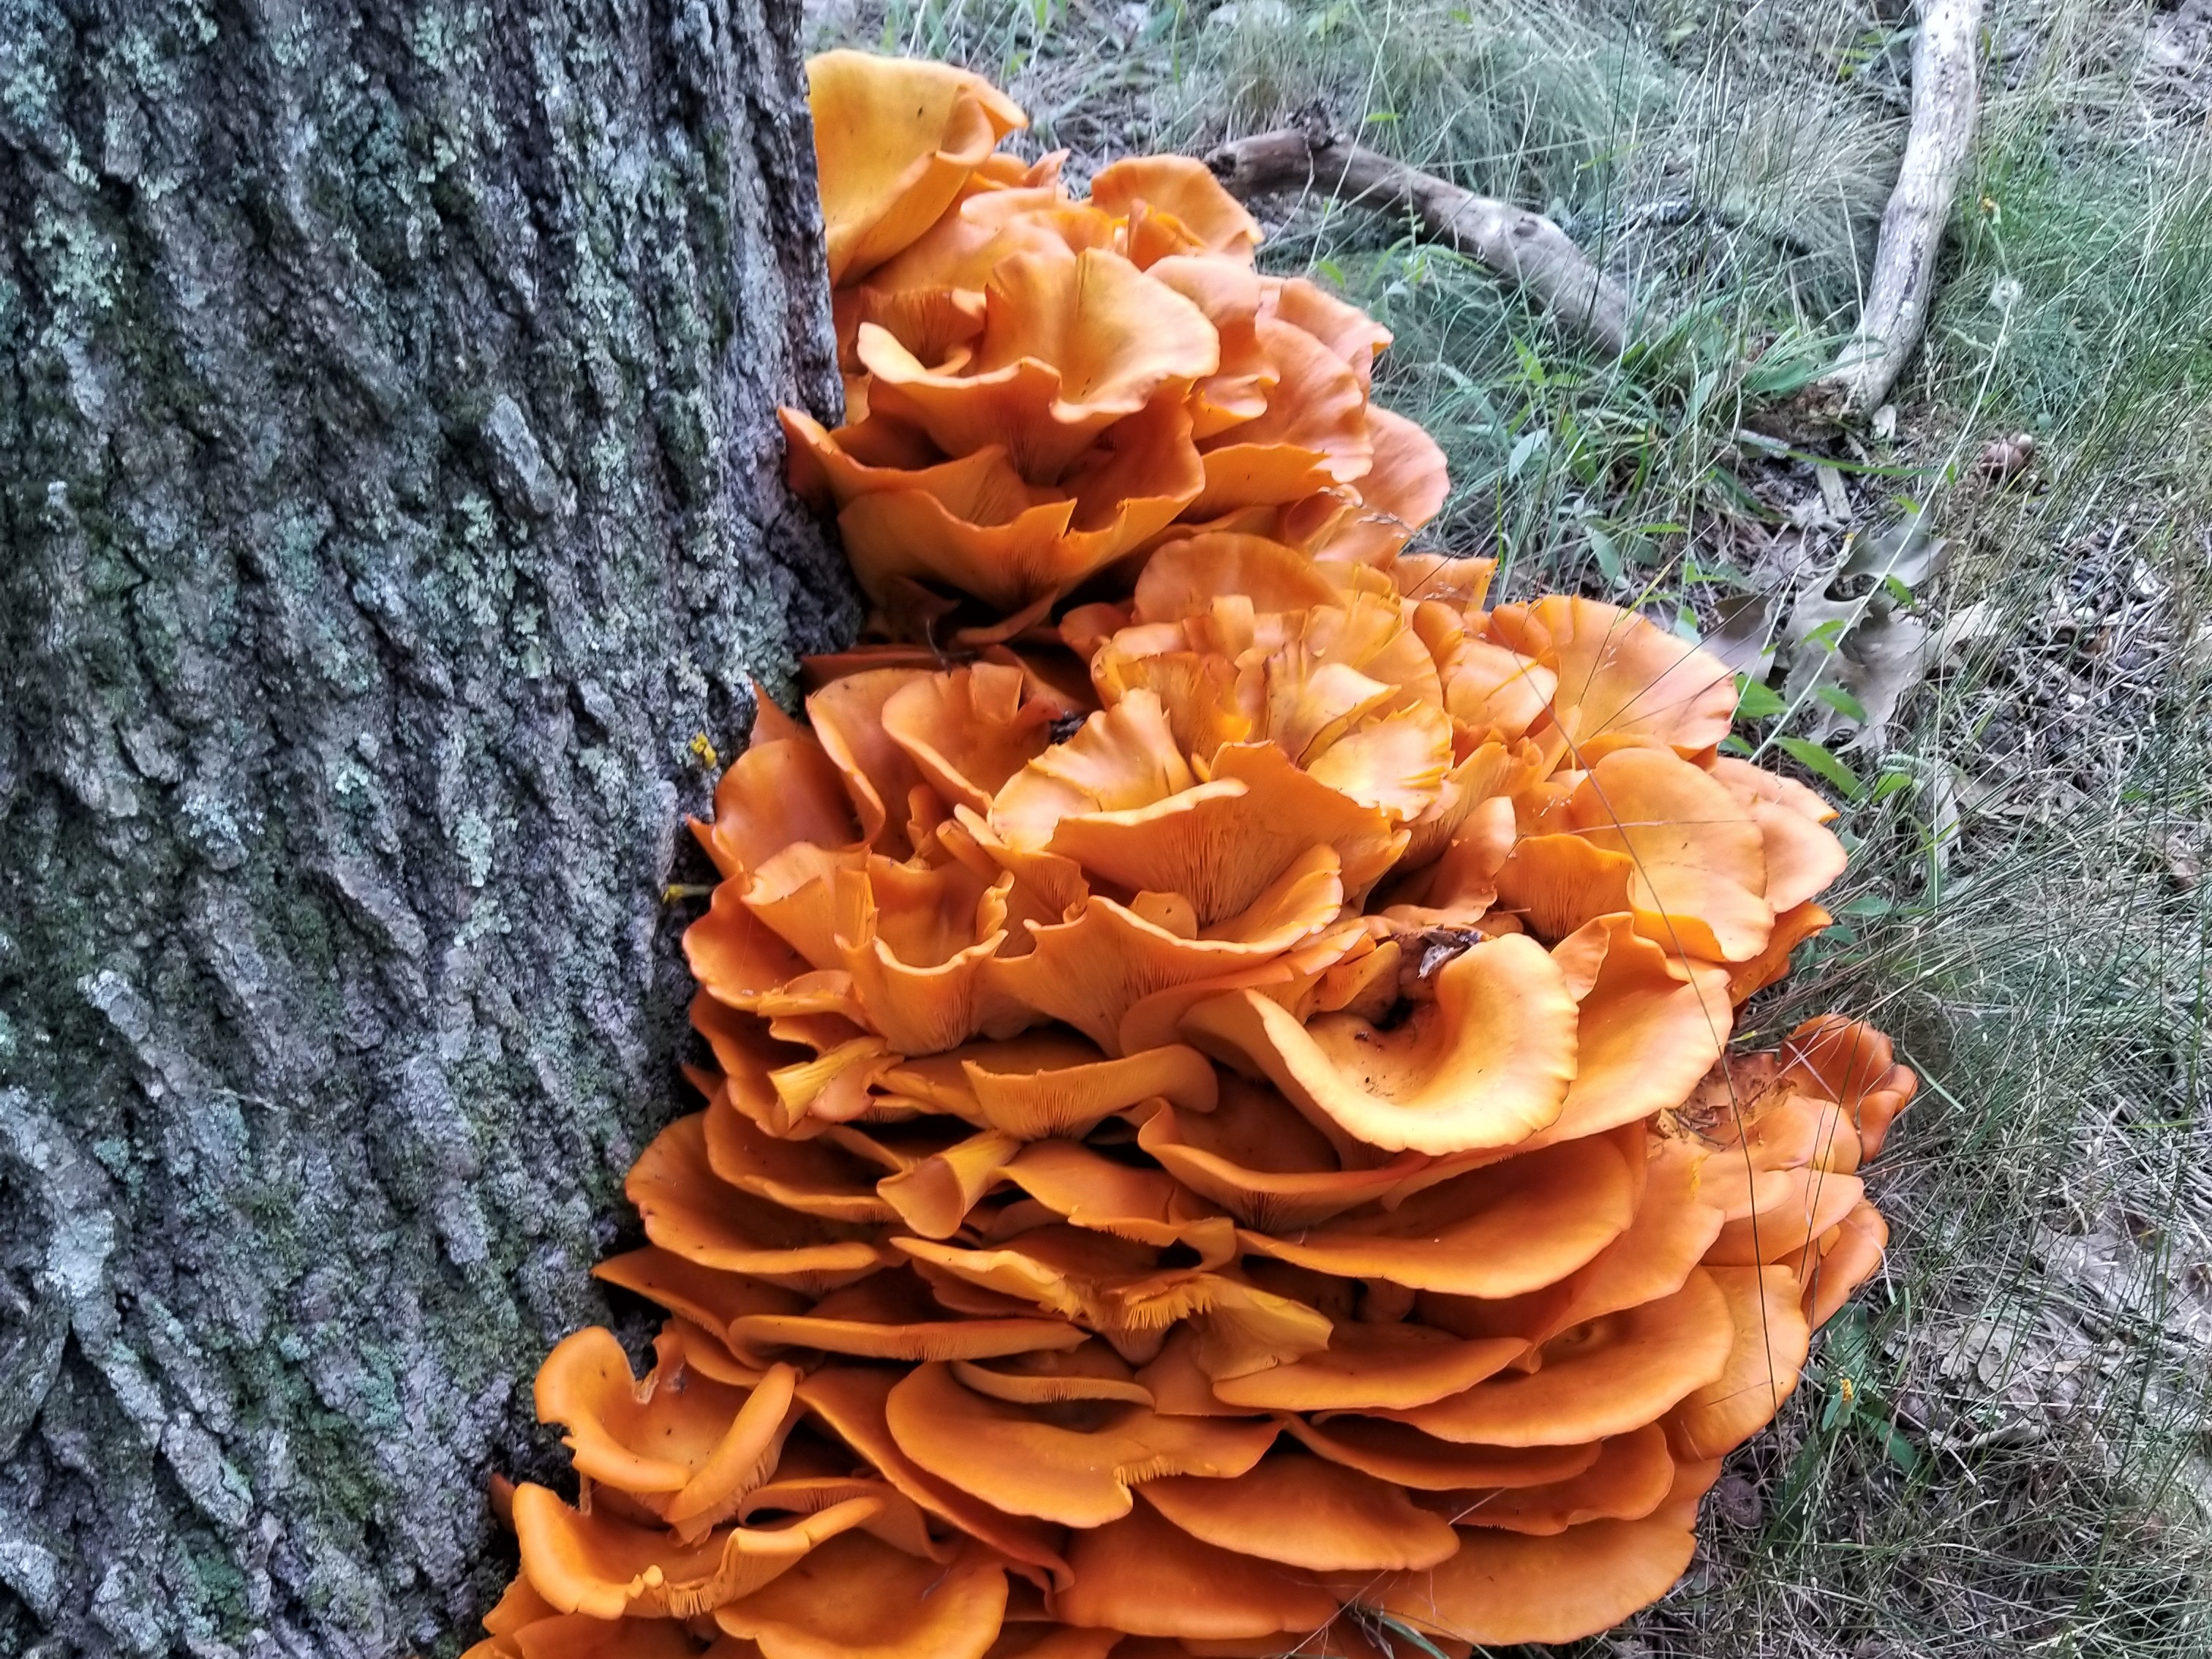 Mushrooms & Other Fungi - Acadia National Park (U.S. National Park Service)